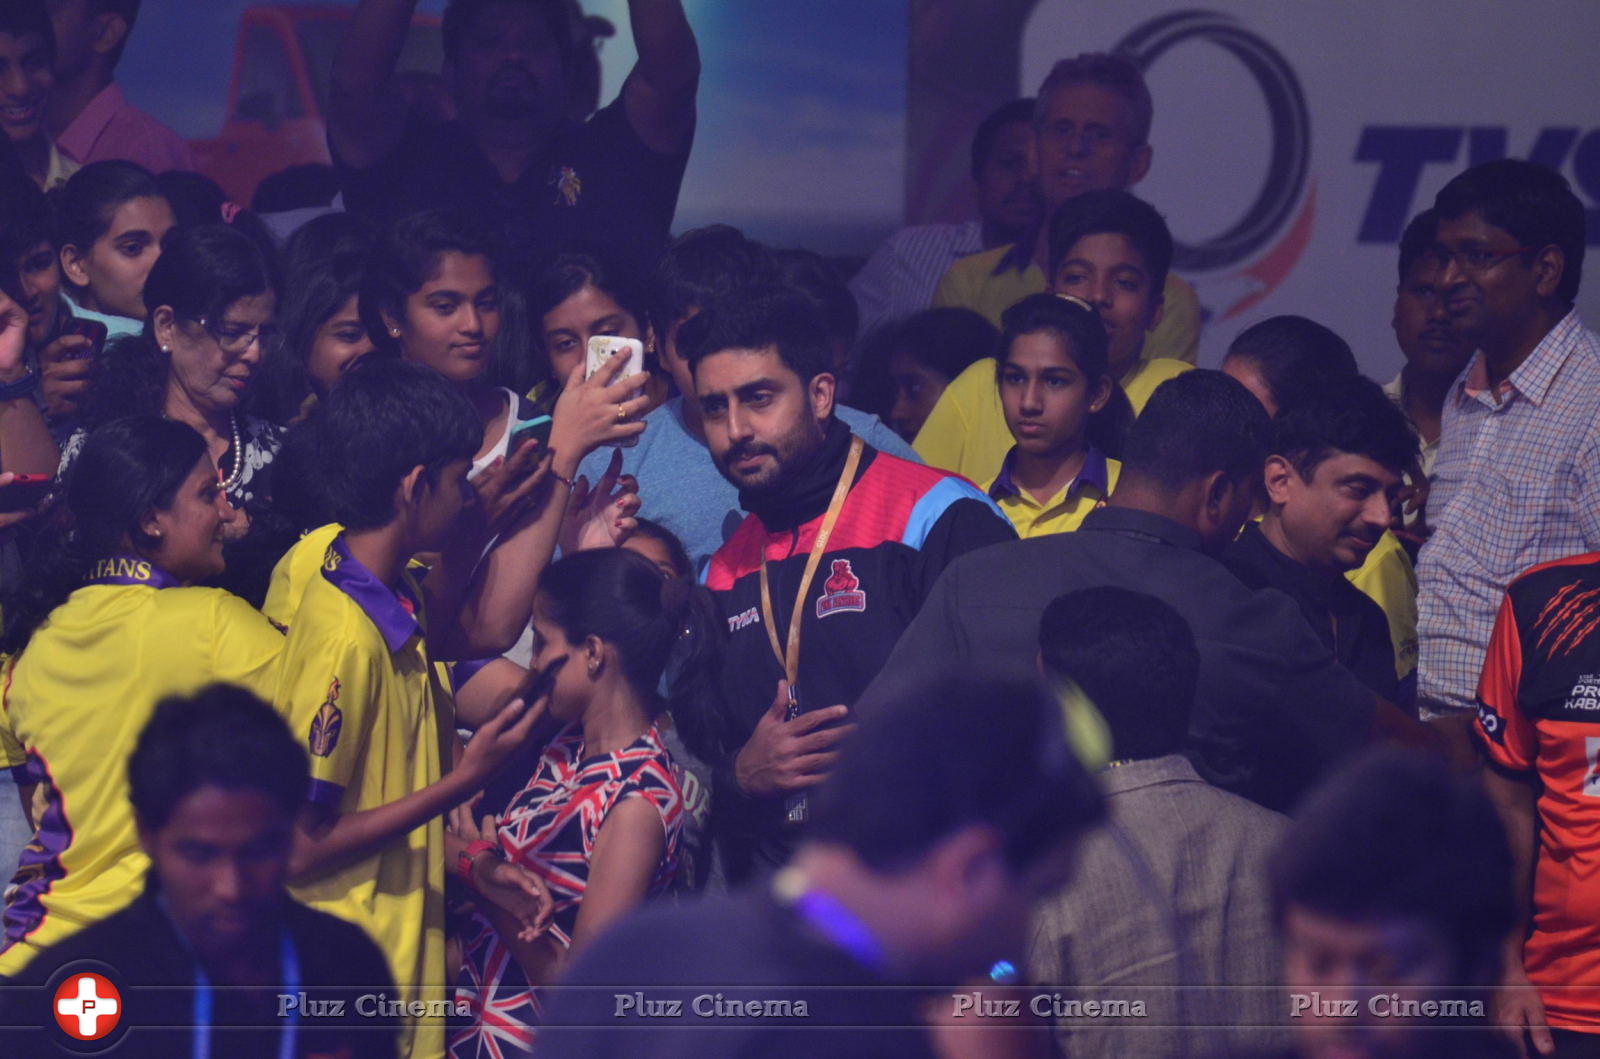 Chiranjeevi and Abhishek Bachchan at PRO Kabaddi Match Photos | Picture 1091393